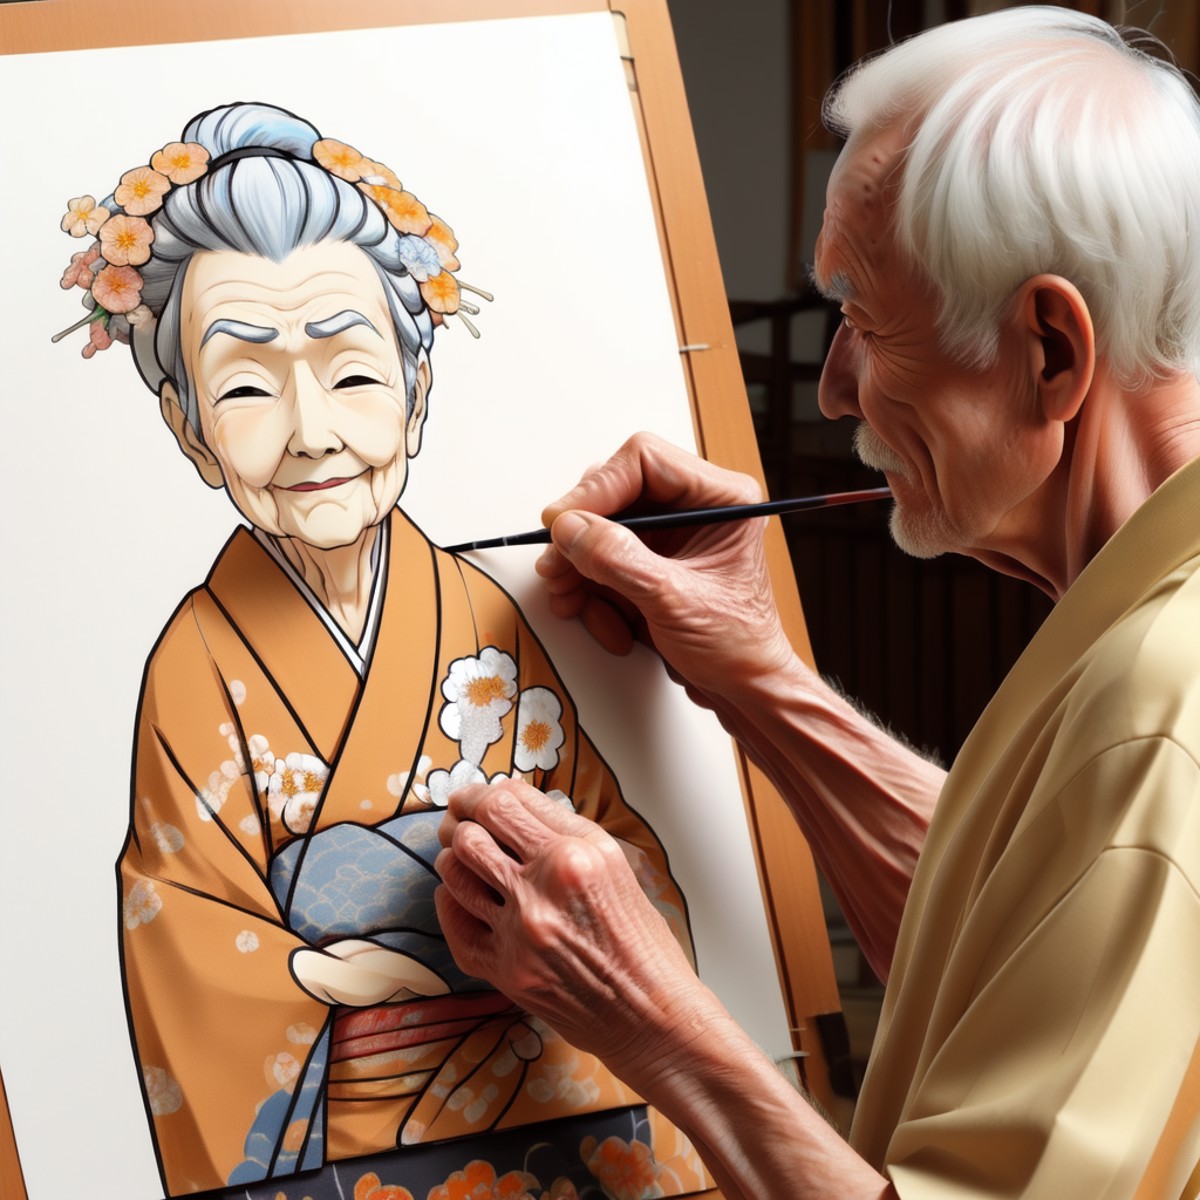 <lora:artist_hands_v2:0.7>, detailed old man shaped illustration, holding paintbrush, painting (action), art brush, orange...